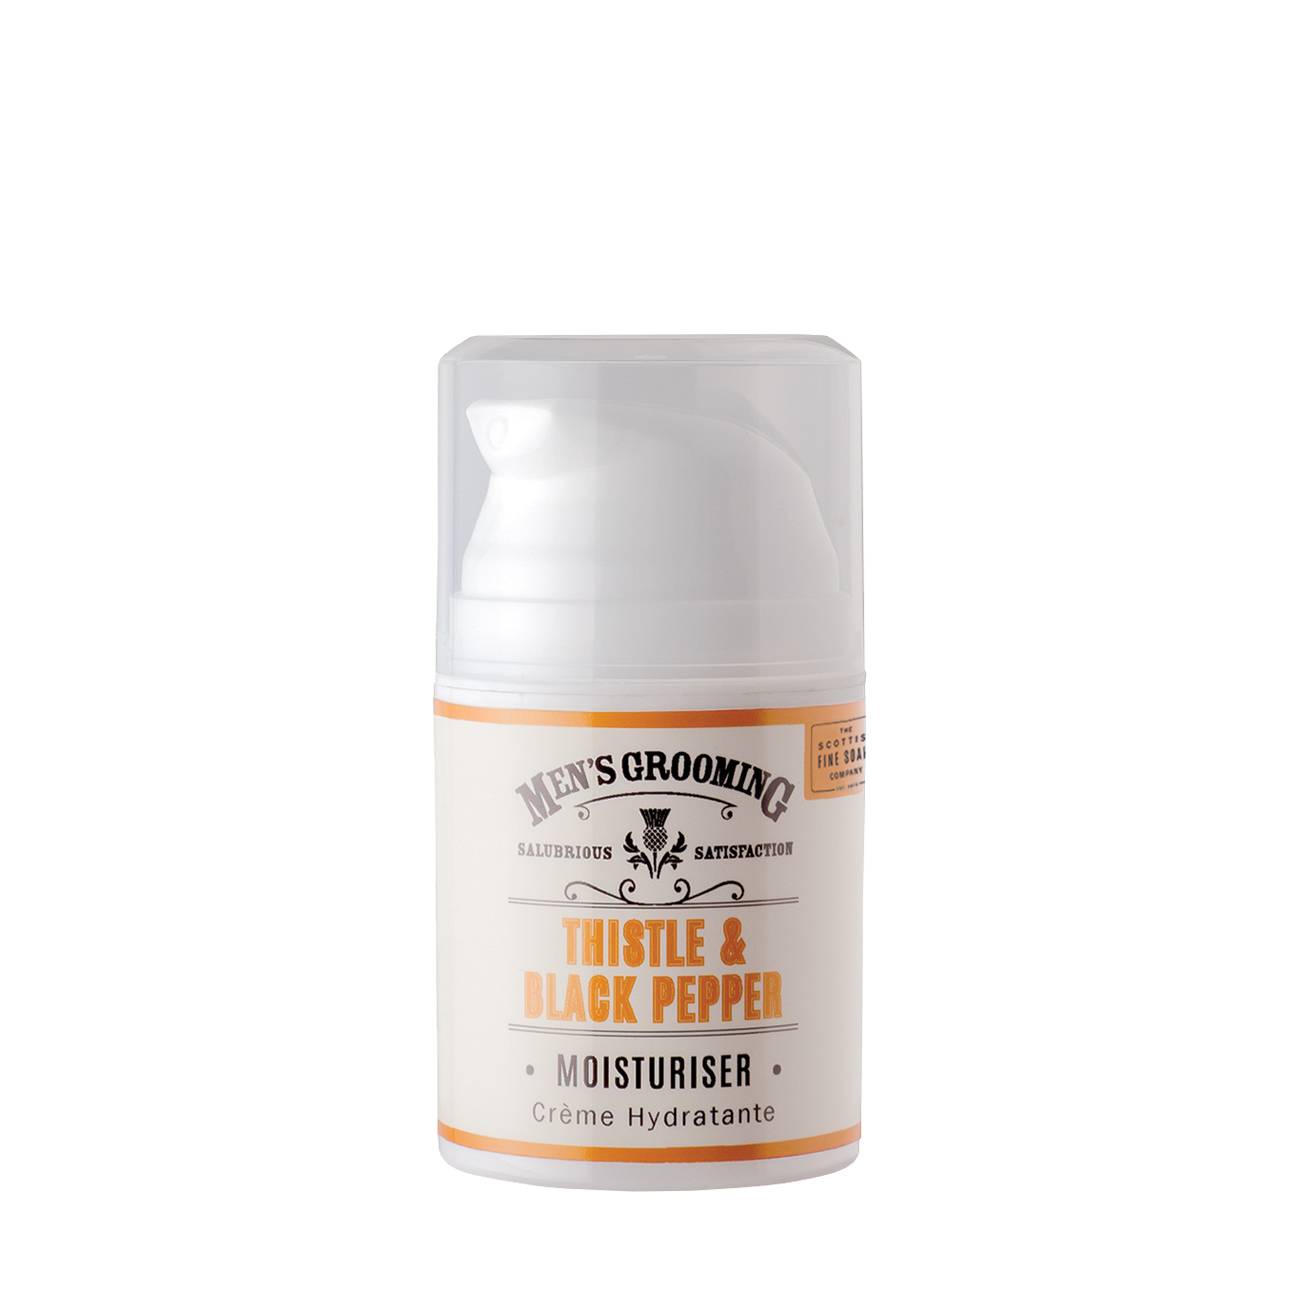 Thistle & Black Pepper Moisturiser 50 ml bestvalue.eu imagine pret reduceri